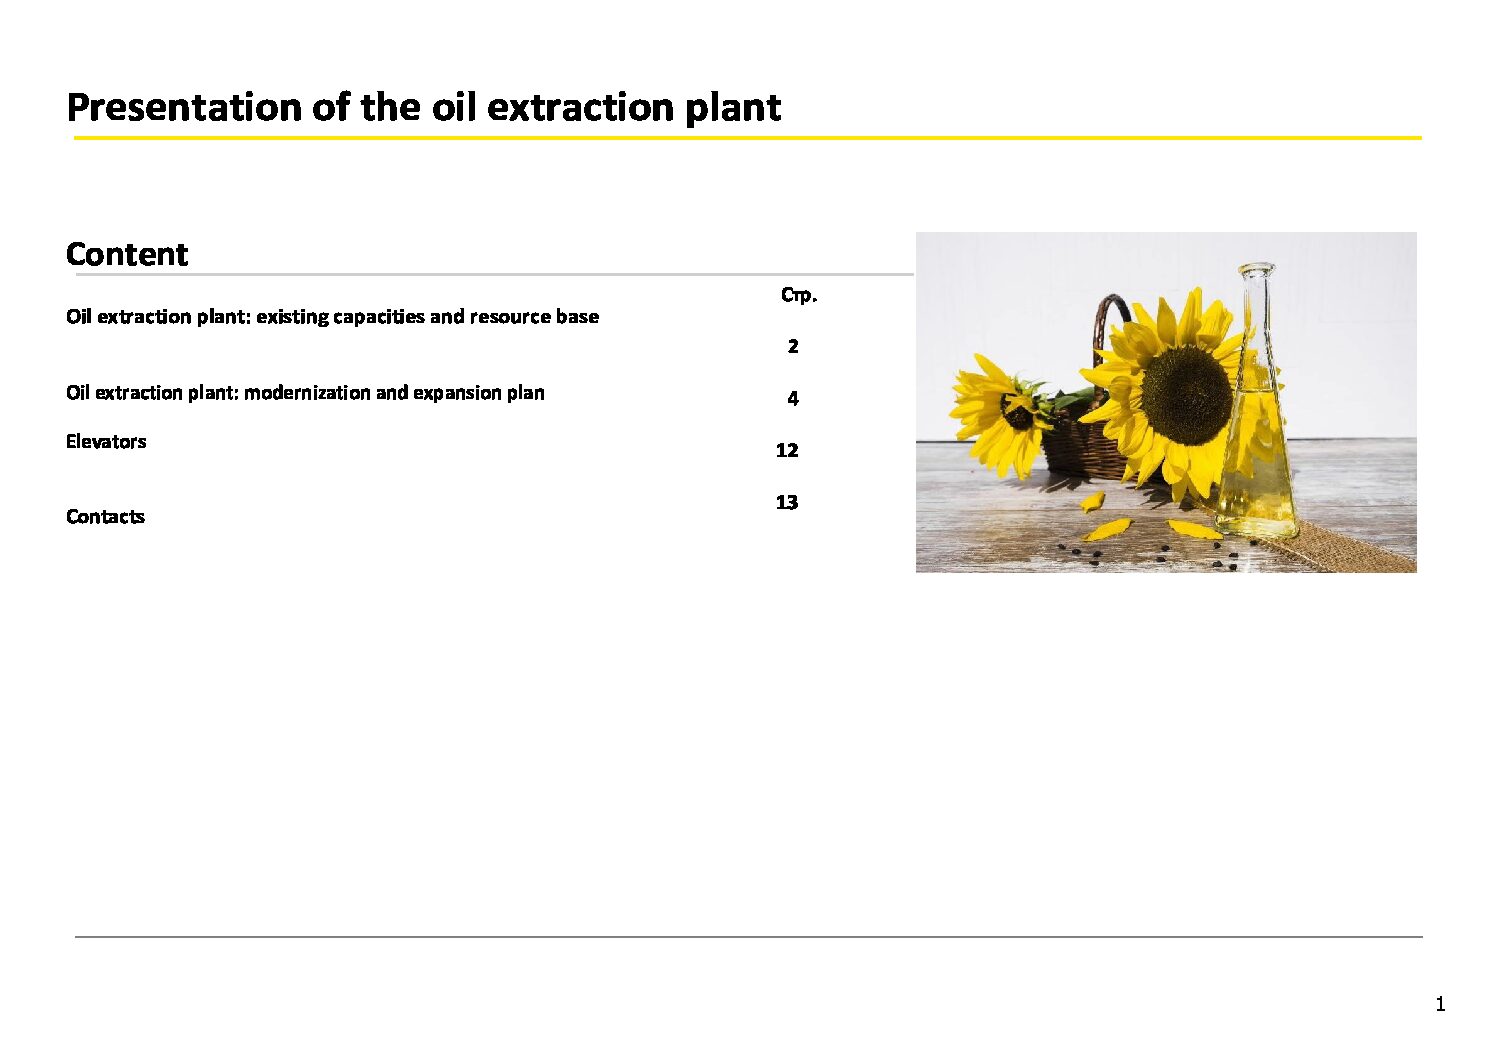 We present the development plan of the Verkhivtsevsky Oil Extraction Plant